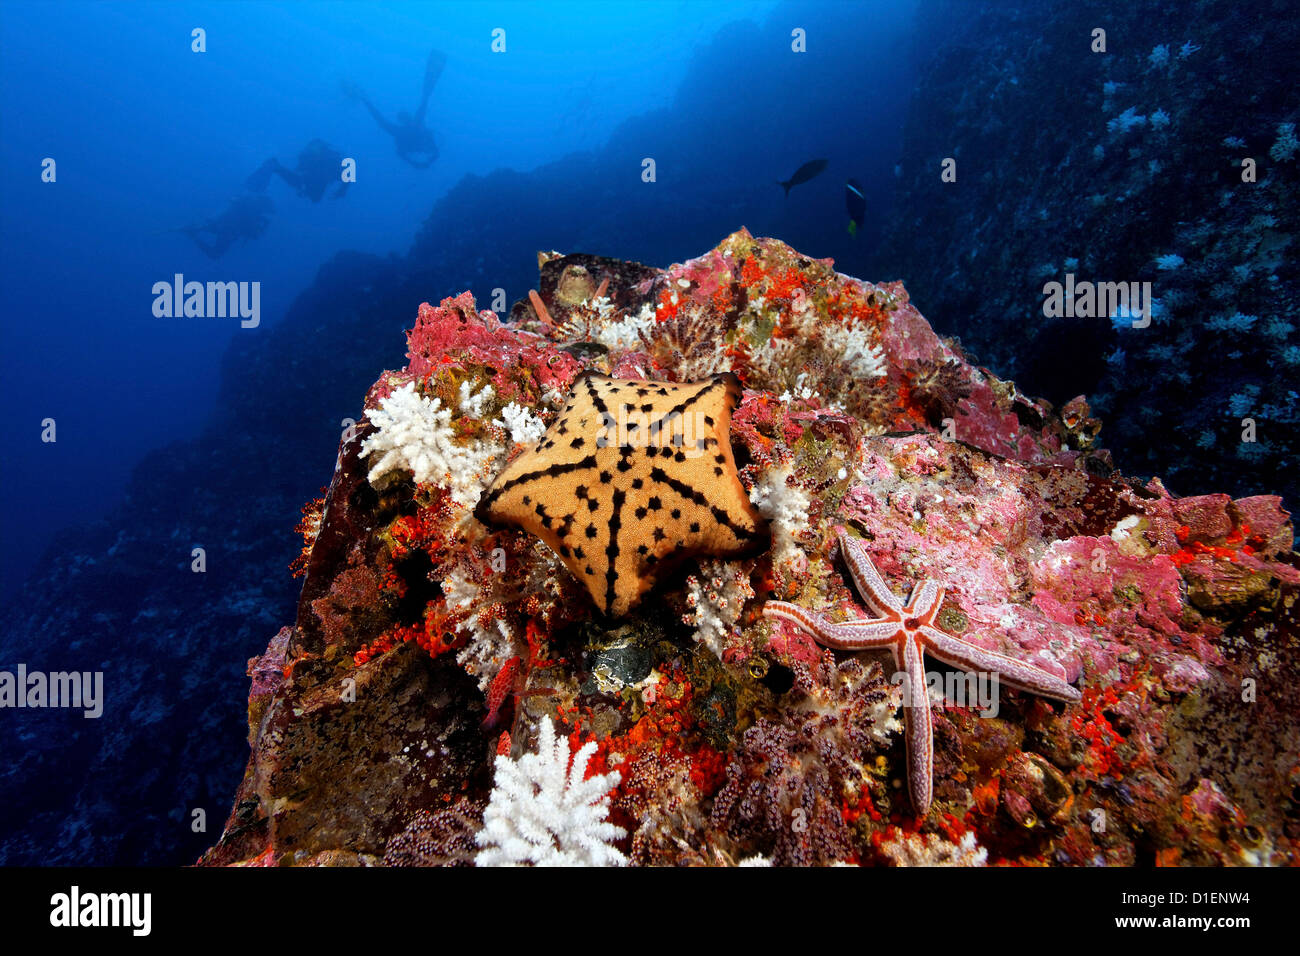 Seastars on a rocky reef, Malpelo Island, Columbia, Pacific Ocean, underwater shot Stock Photo